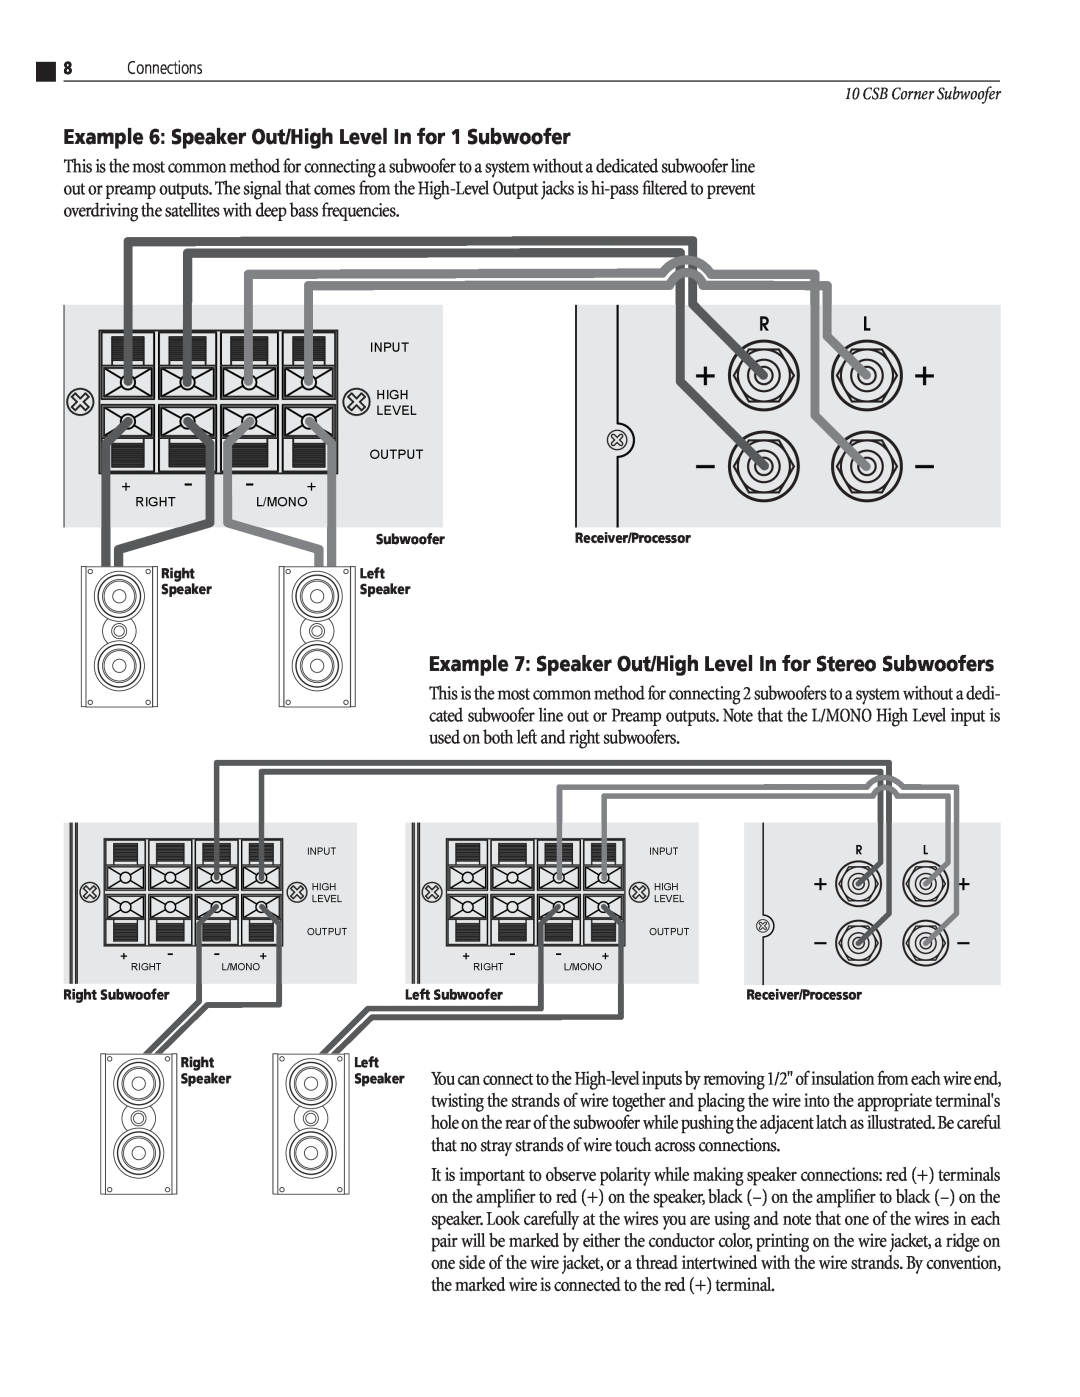 Atlantic Technology 10 CSB instruction manual Right Speaker, SubwooferReceiver/Processor Left Speaker, Left Subwoofer 